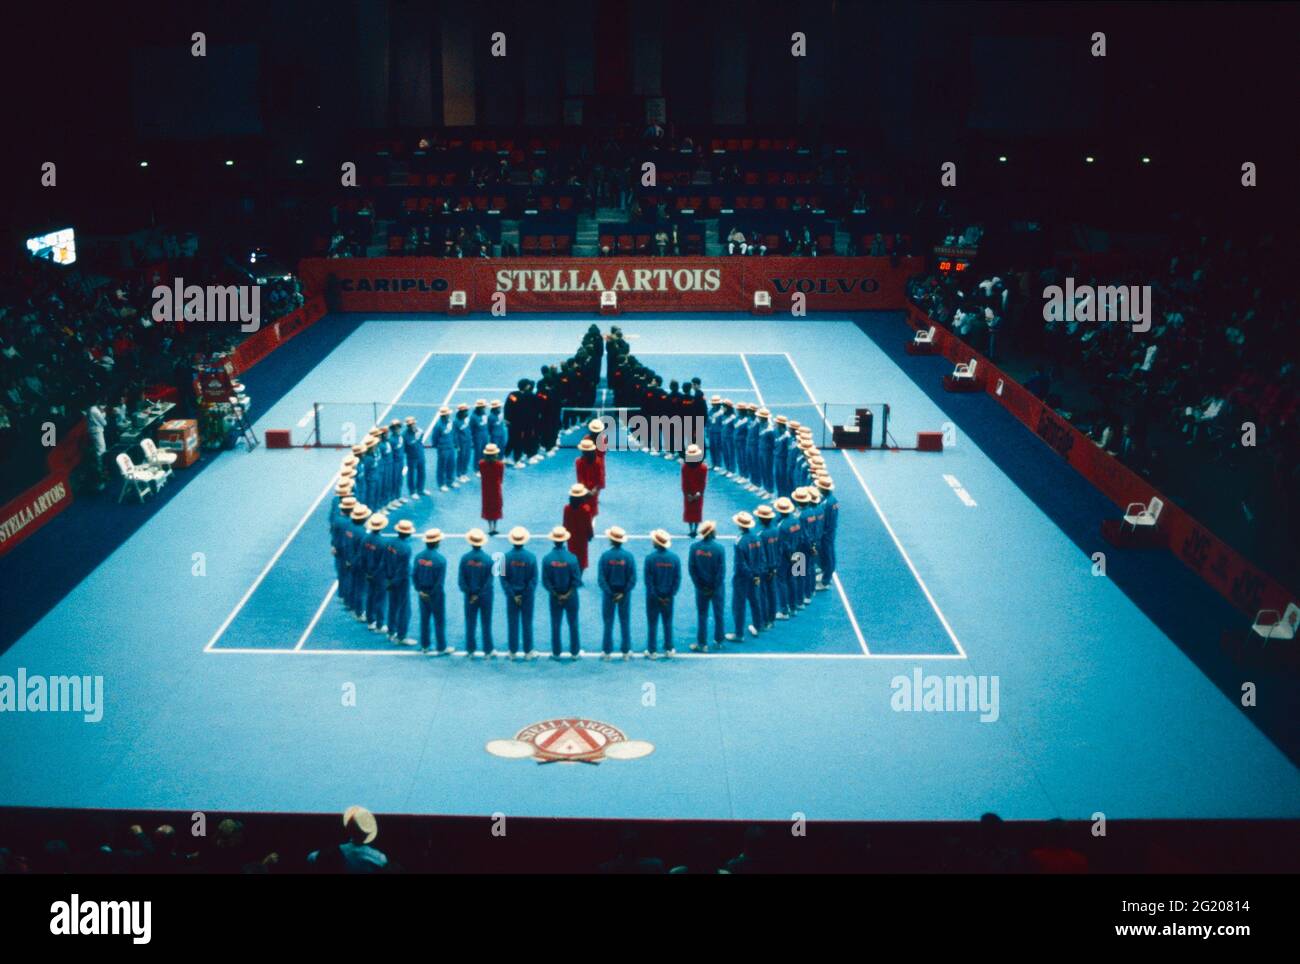 Indoor arena Palatrussardi Stella Artois tennis tournament, Milan, Italy 1991 Stock Photo